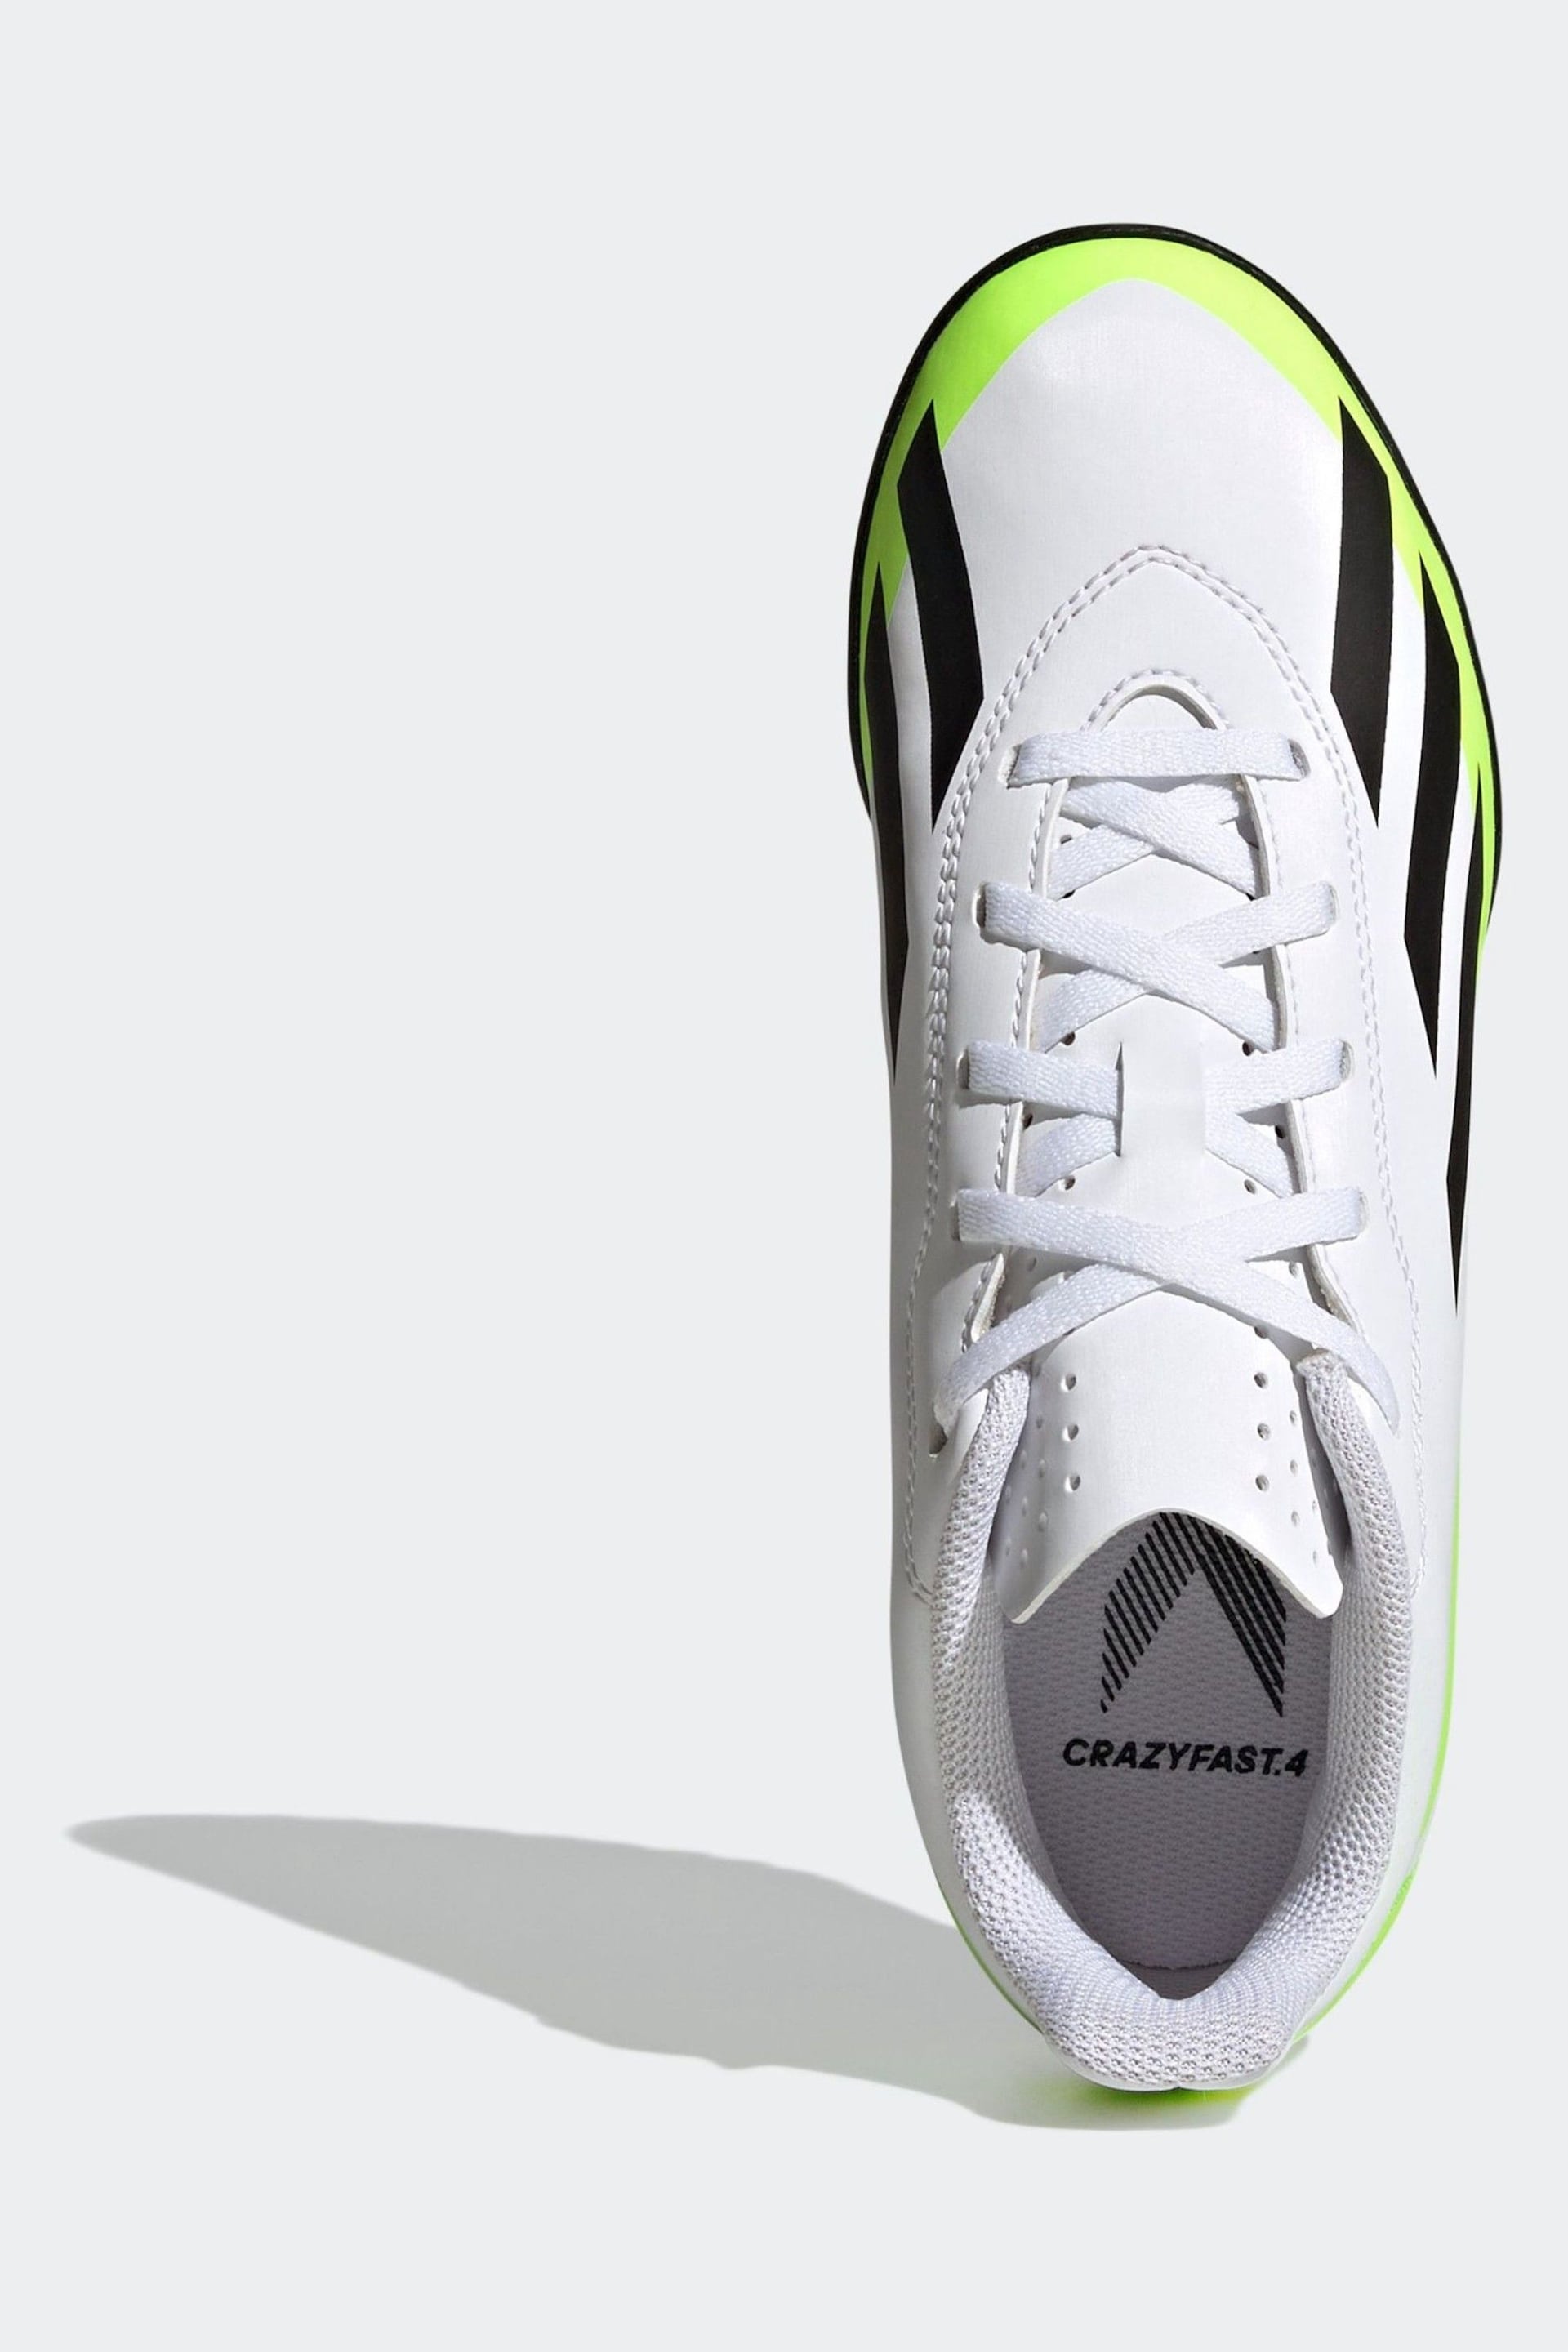 adidas White/Black Football Sport Performance Kids X Crazyfast 4 Turf Boots - Image 6 of 9